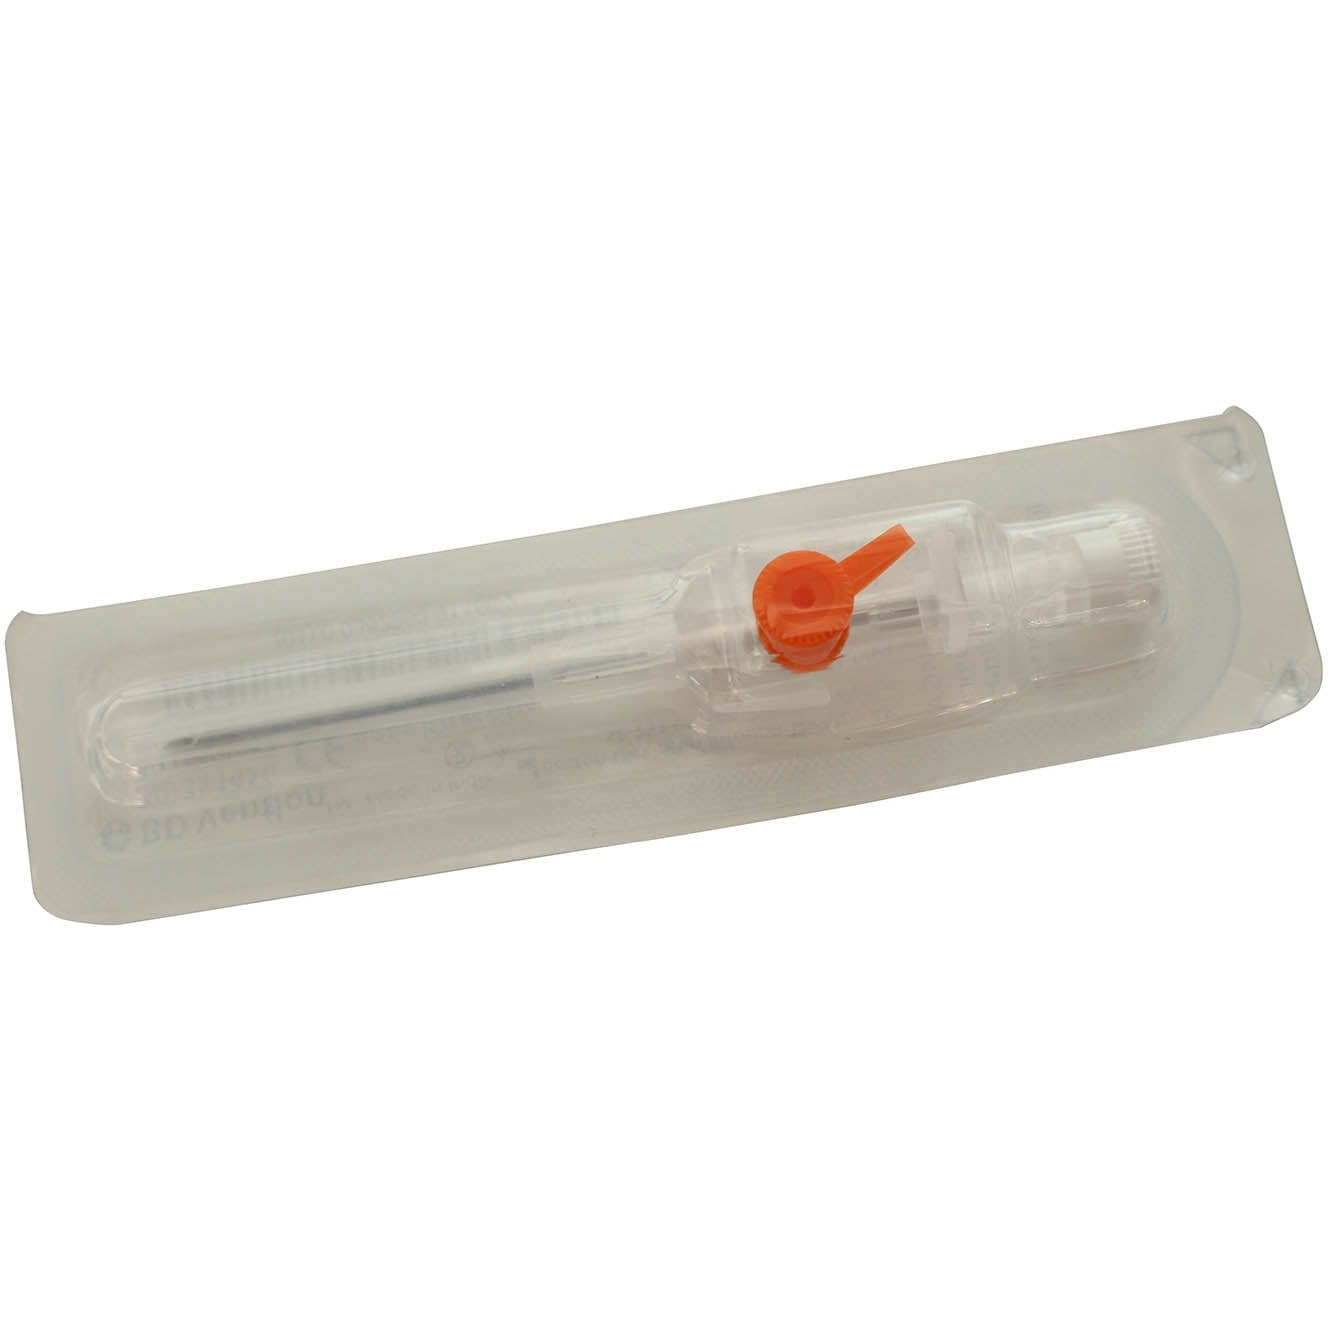 BD Venflon Peripheral IV Catheter Ported 14g, 45mm Winged - Single